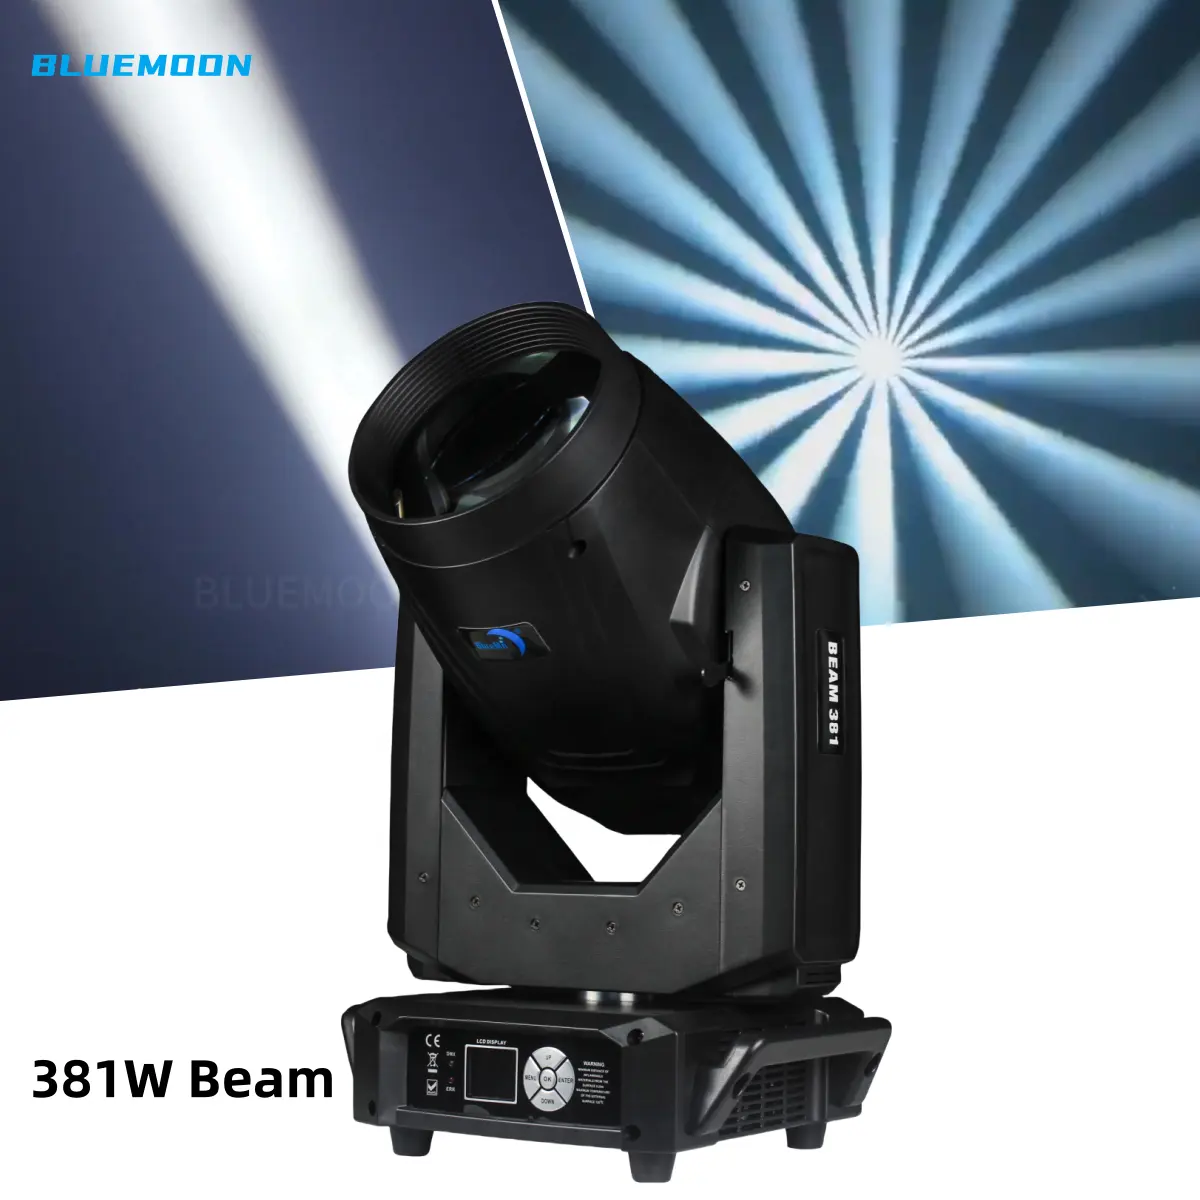 New 361W 381W 20R Sharpy Beam Stage Lighting Equipment Concert Dj Beam 20R 380W Beam Moving Head Light